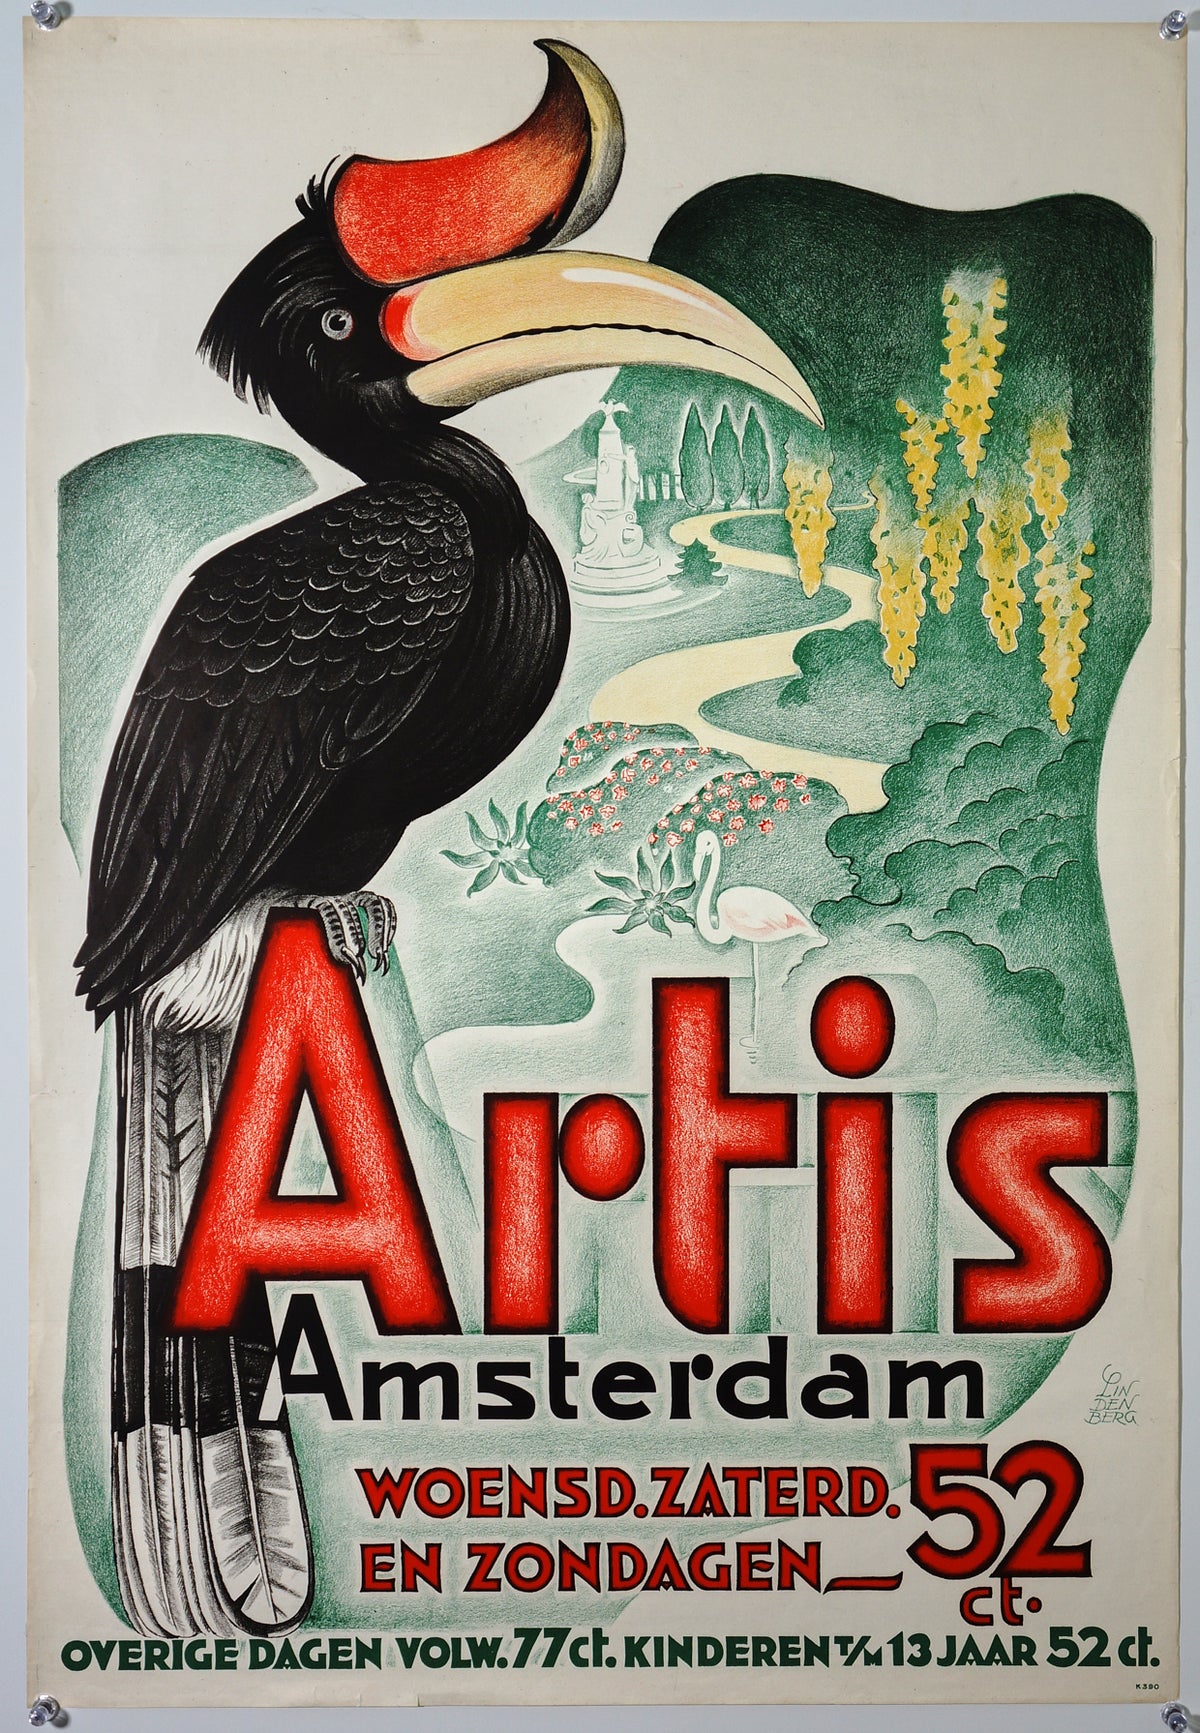 Artis Amsterdam - Authentic Vintage Poster